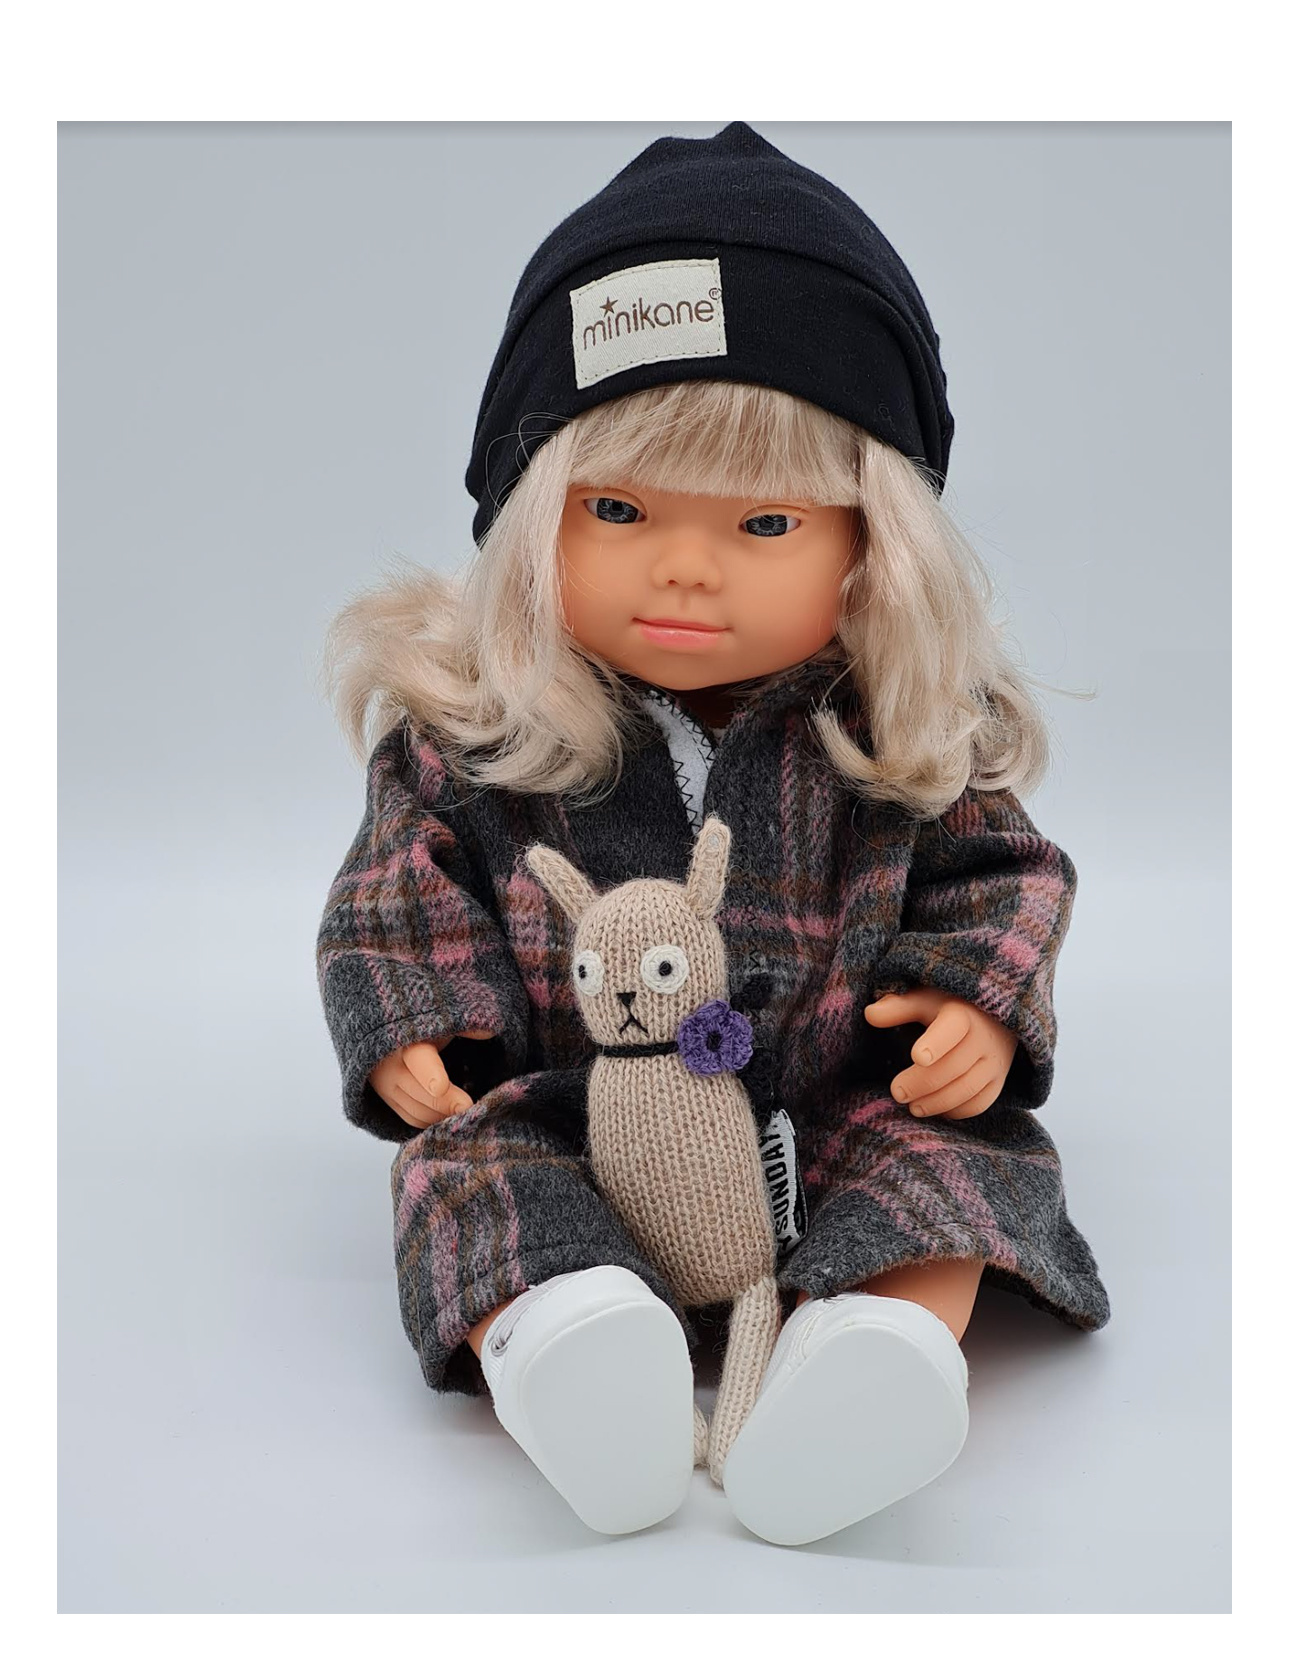 Miniland poppen Miniland doll European girl with Down Syndrome 38 cm / SHOW MODEL